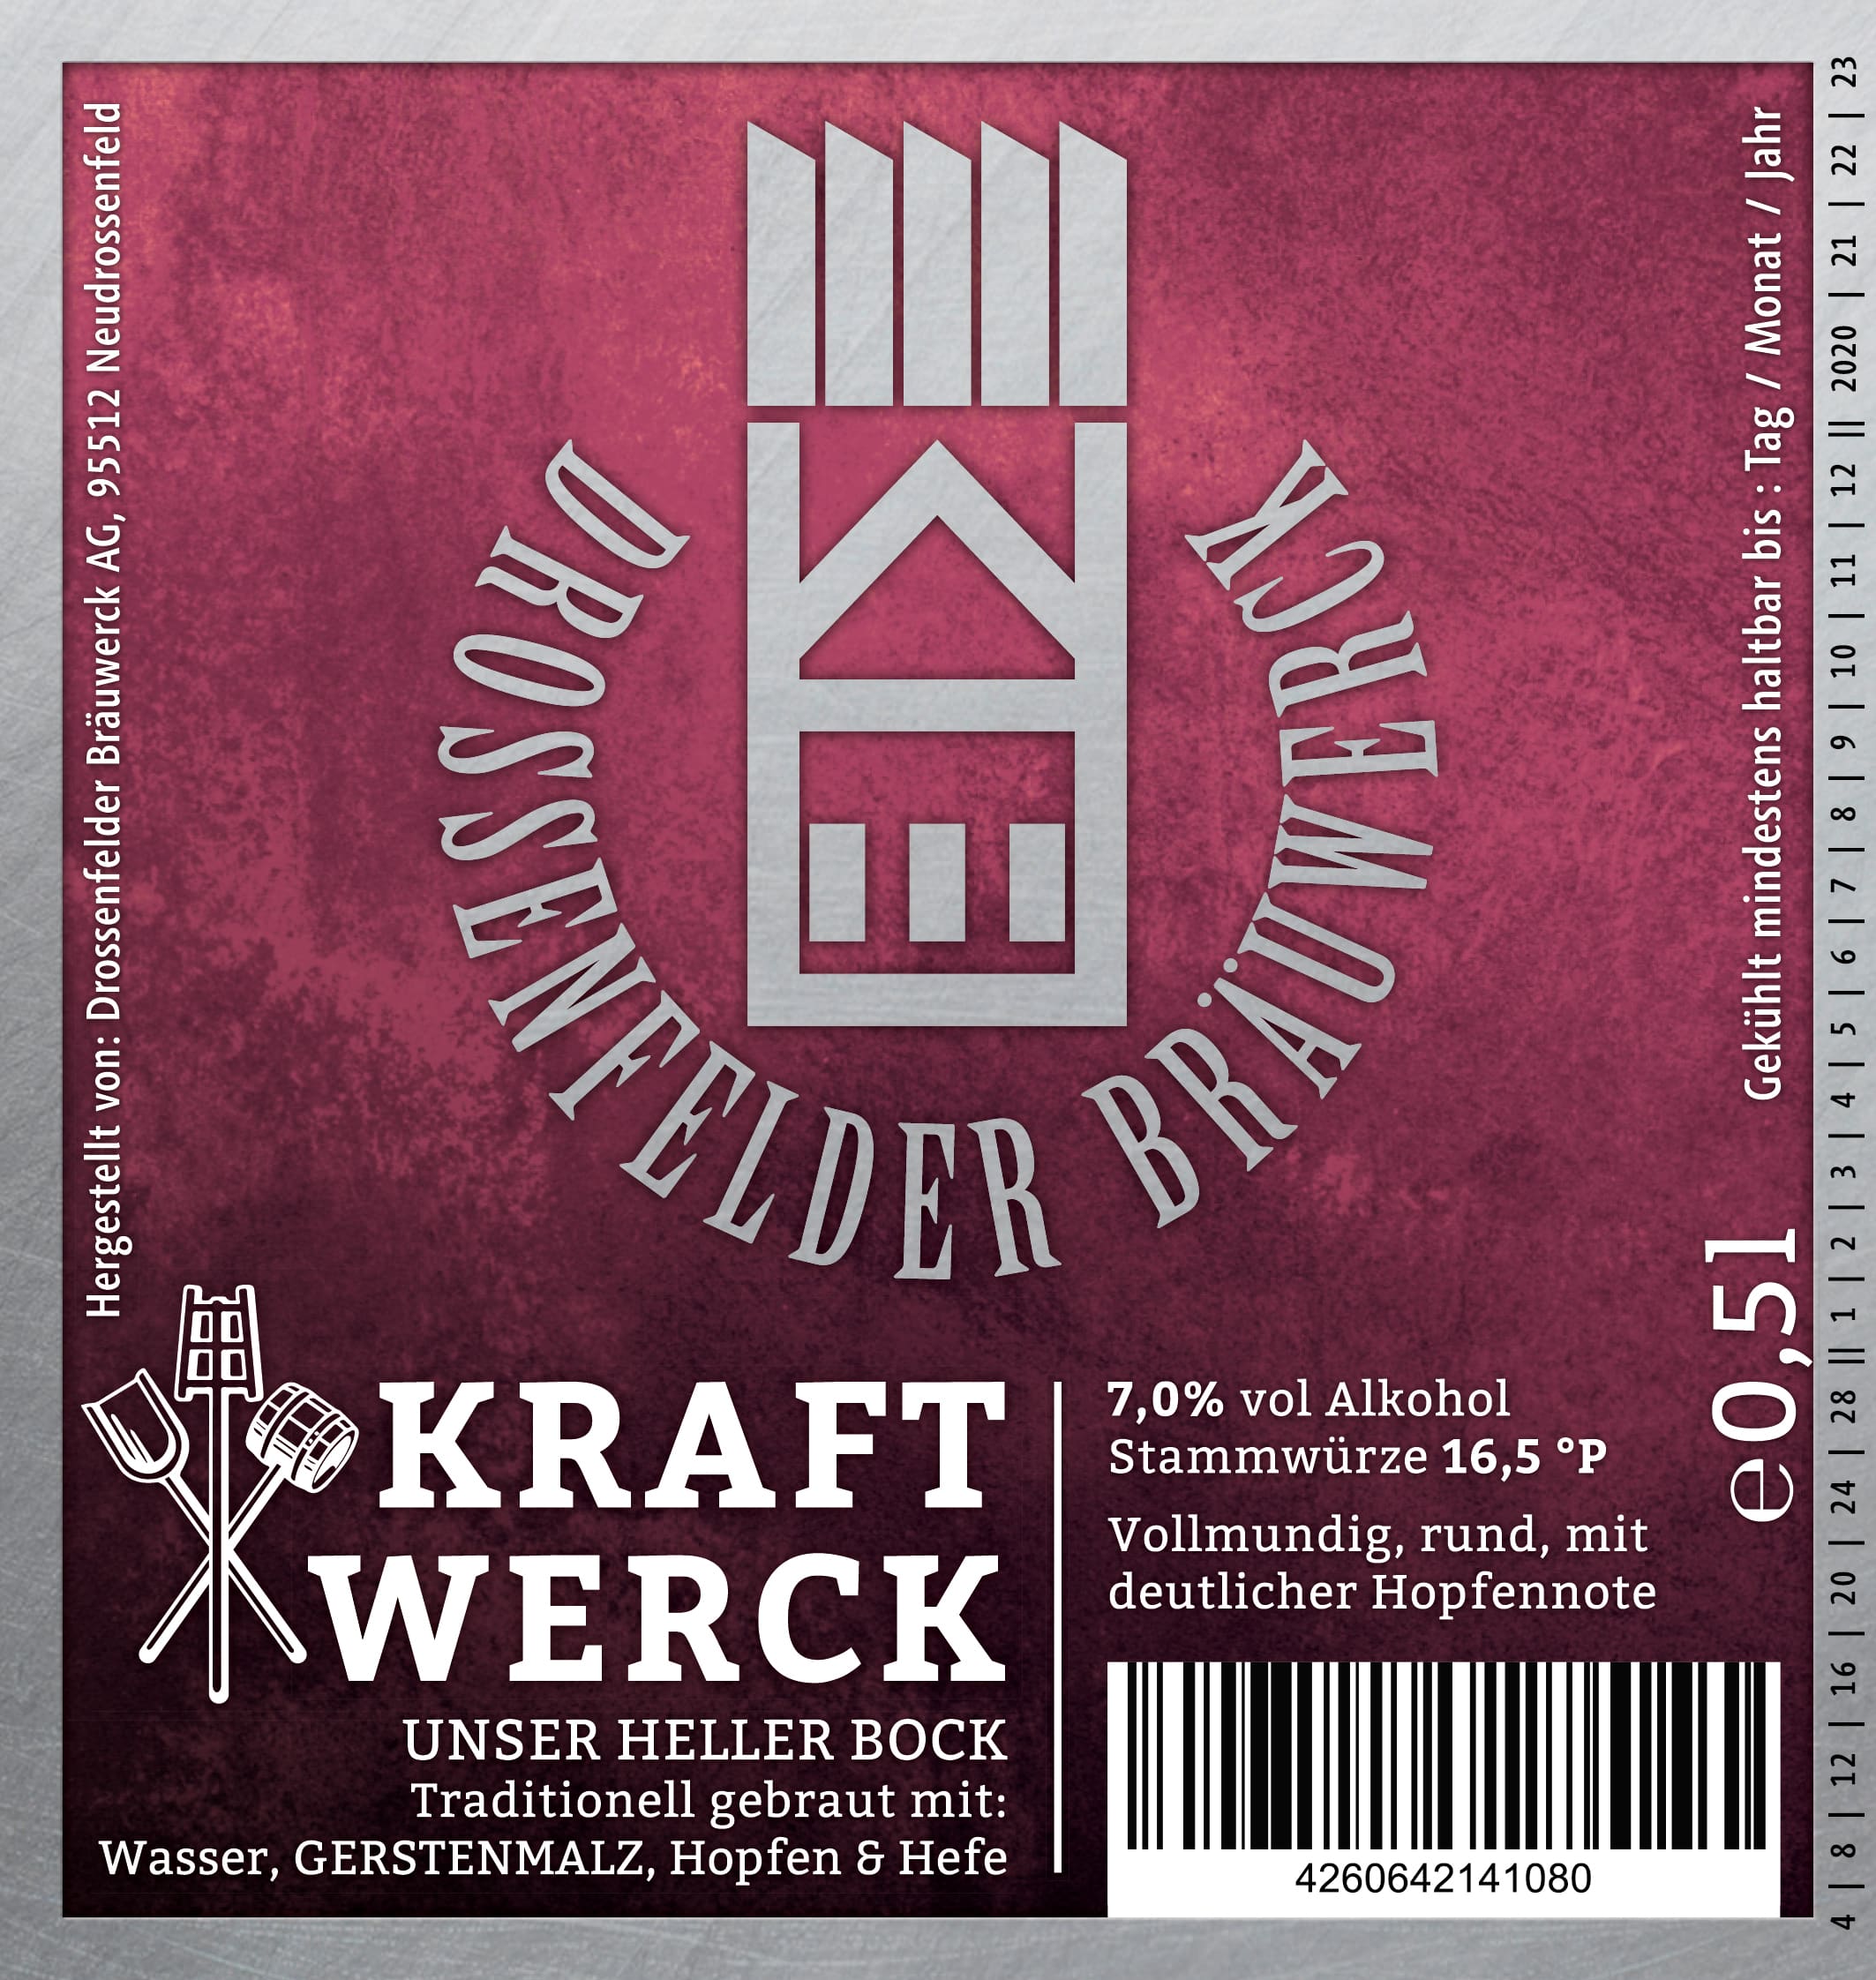 Etikett KraftWeck - Drossenfelder Bräuwerck AG - Gaststätte, Biergarten und Brauerei in Neudrossenfeld